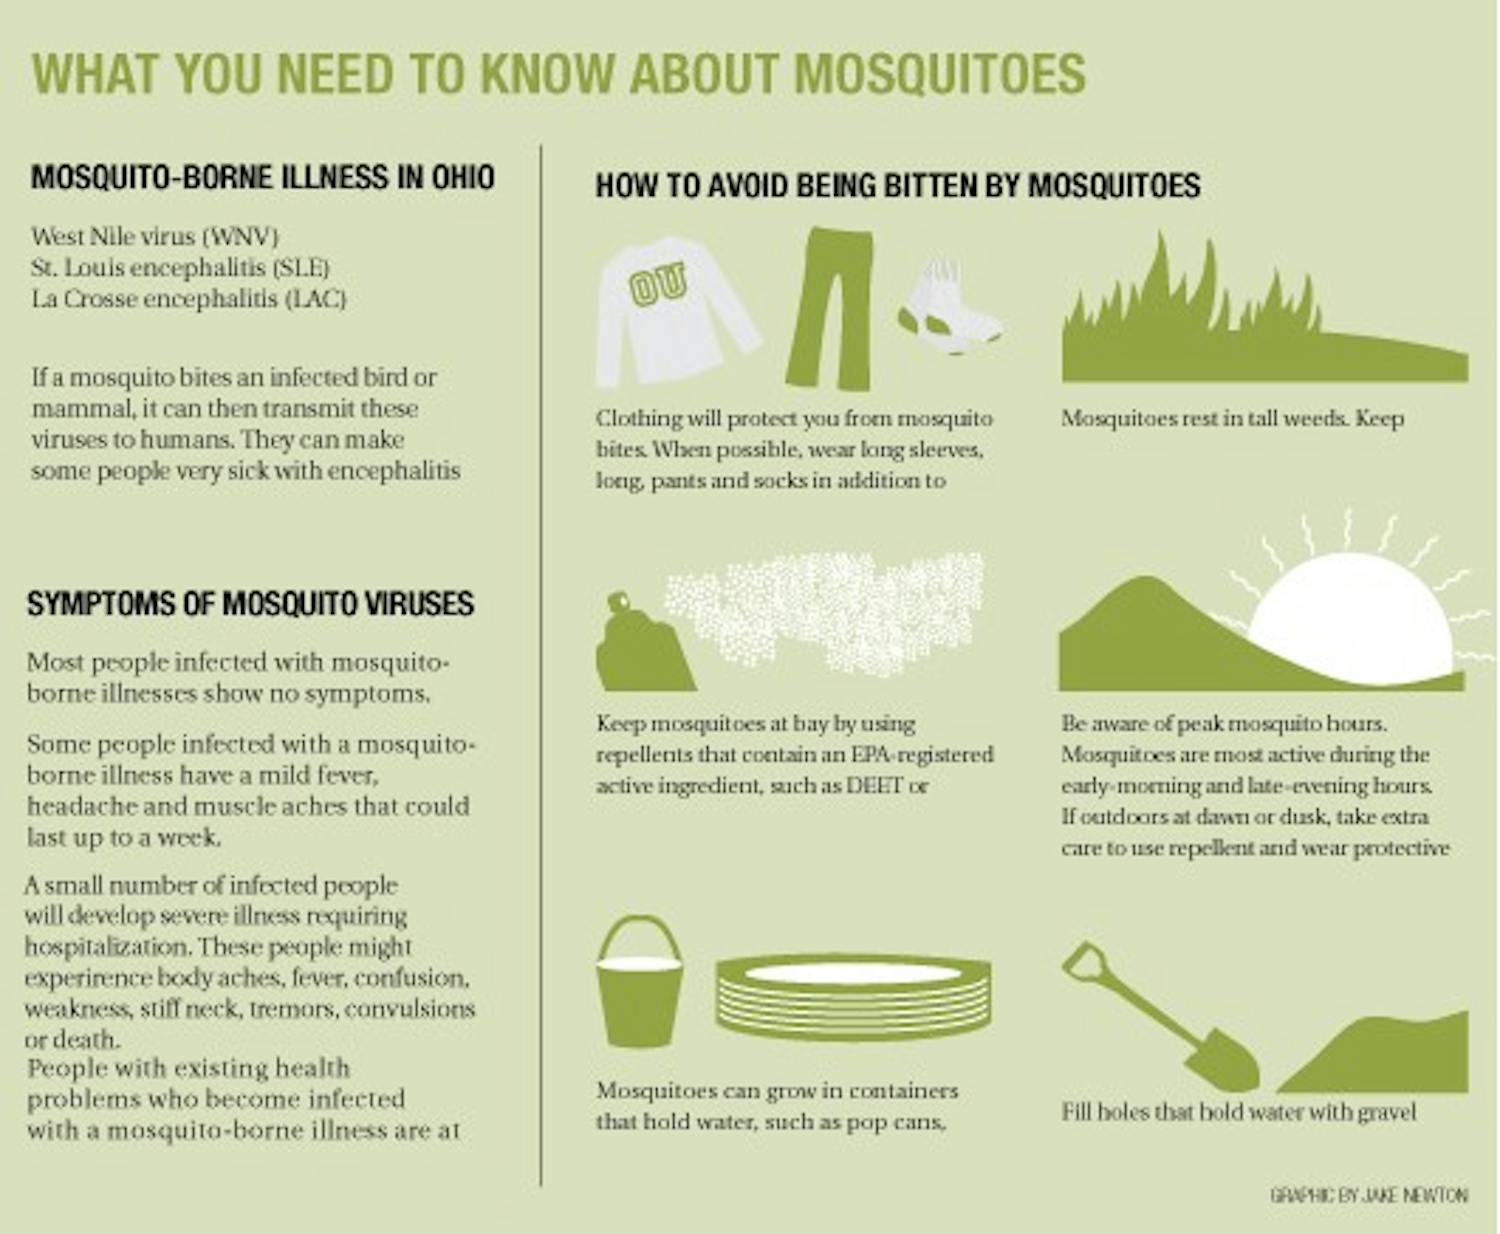 Mosquito-borne diseases down in Ohio  